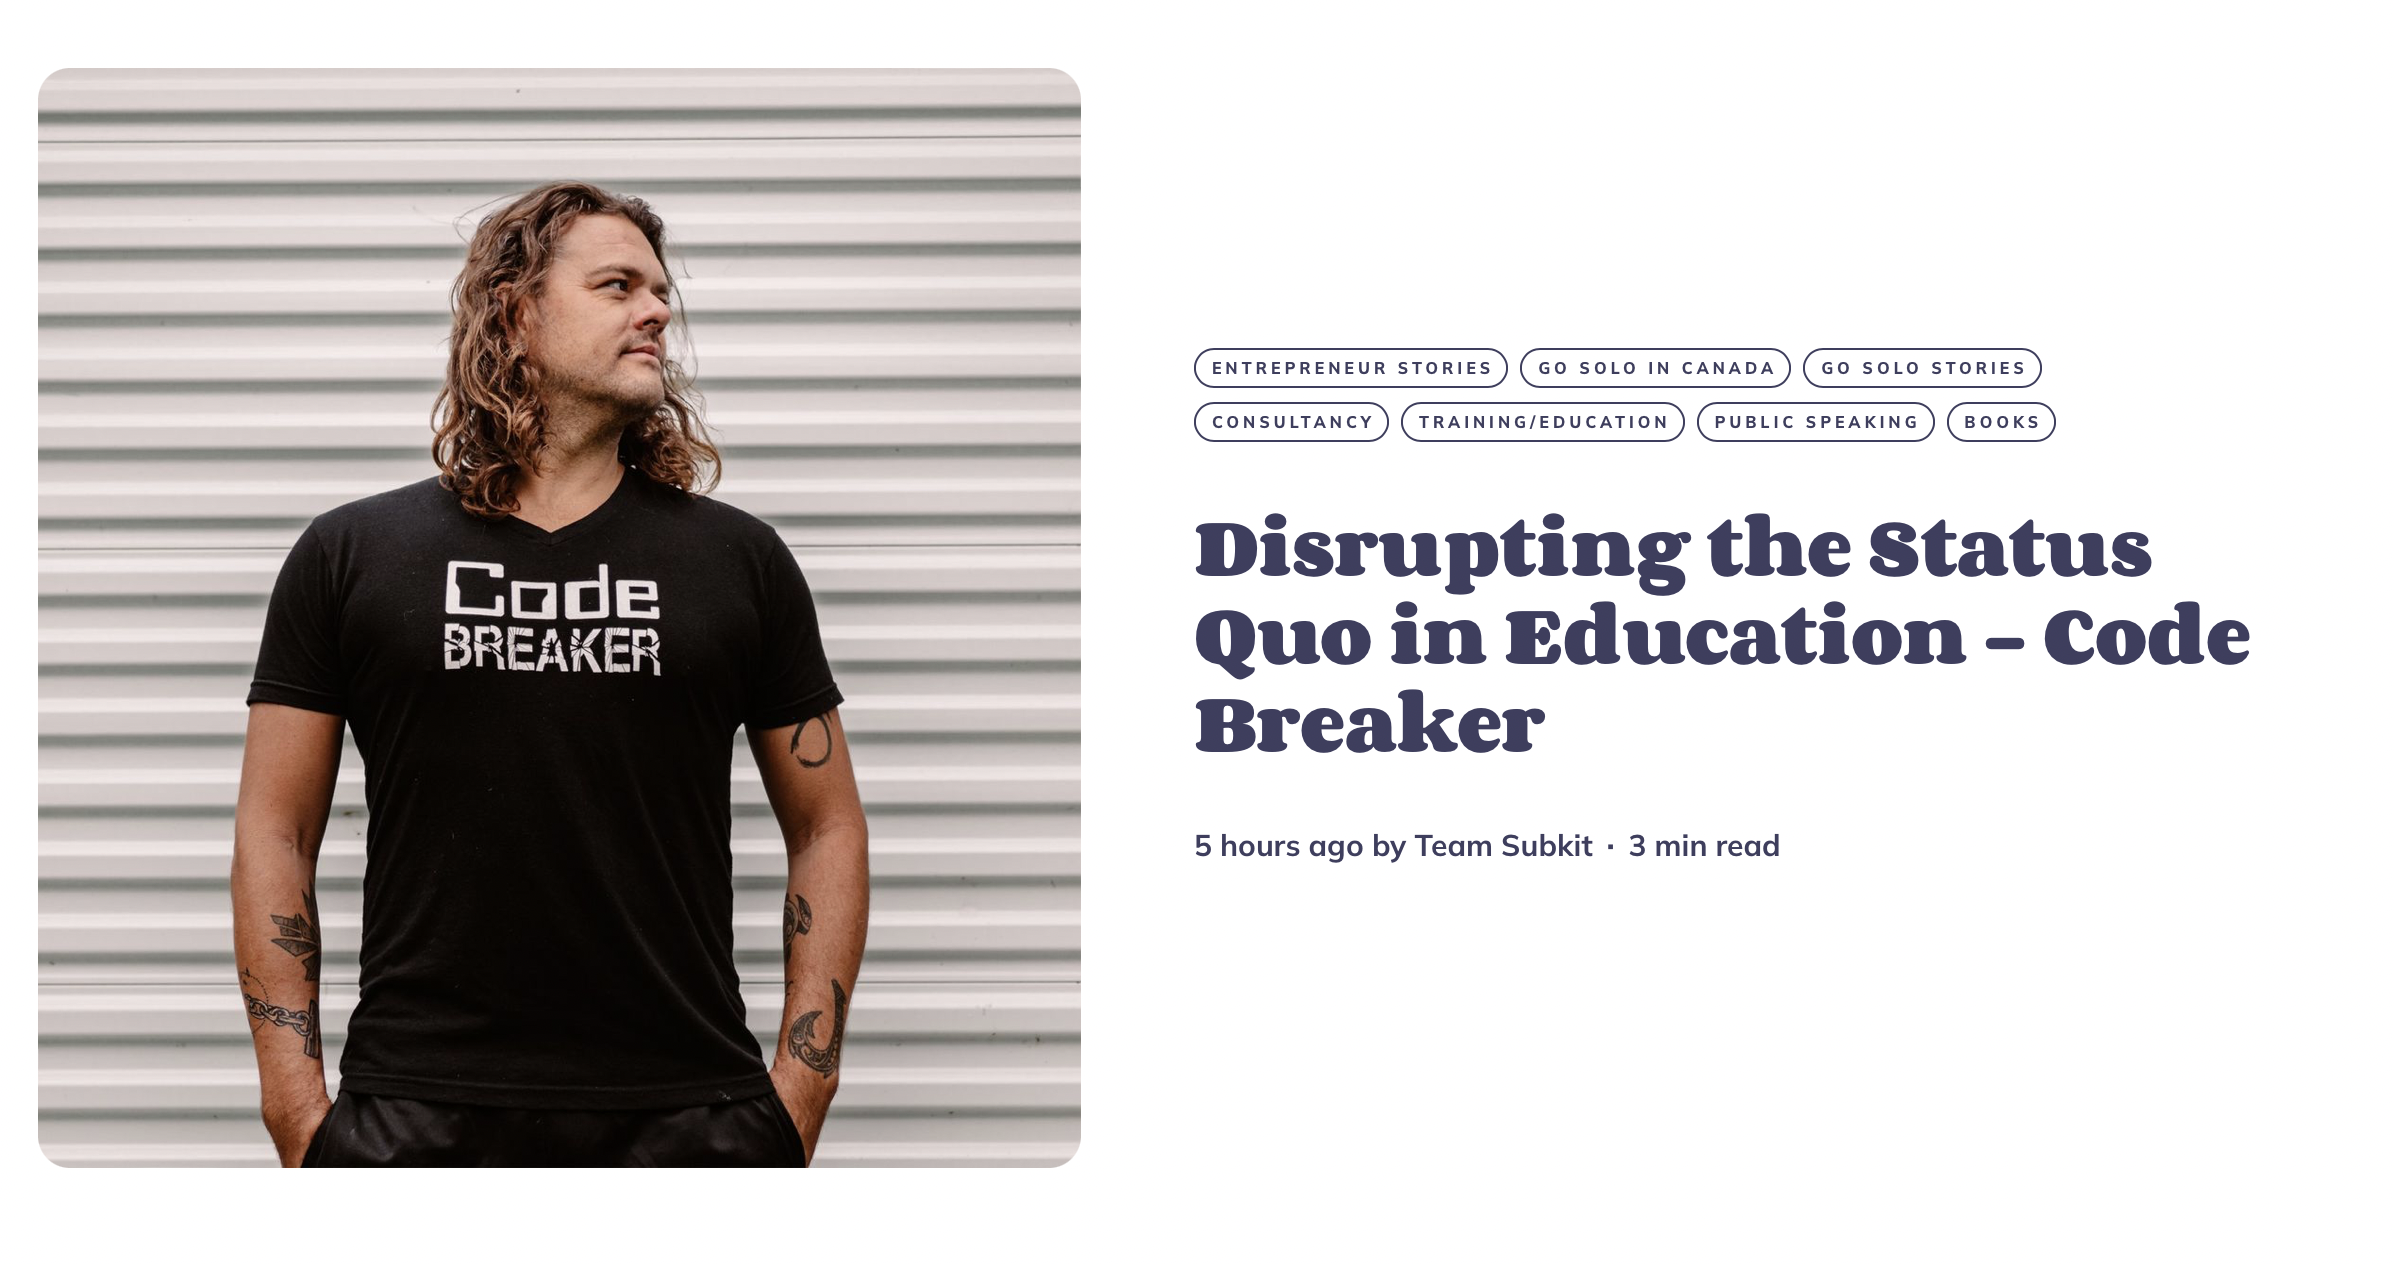 Disrupting the Status Quo in Education - Code Breaker